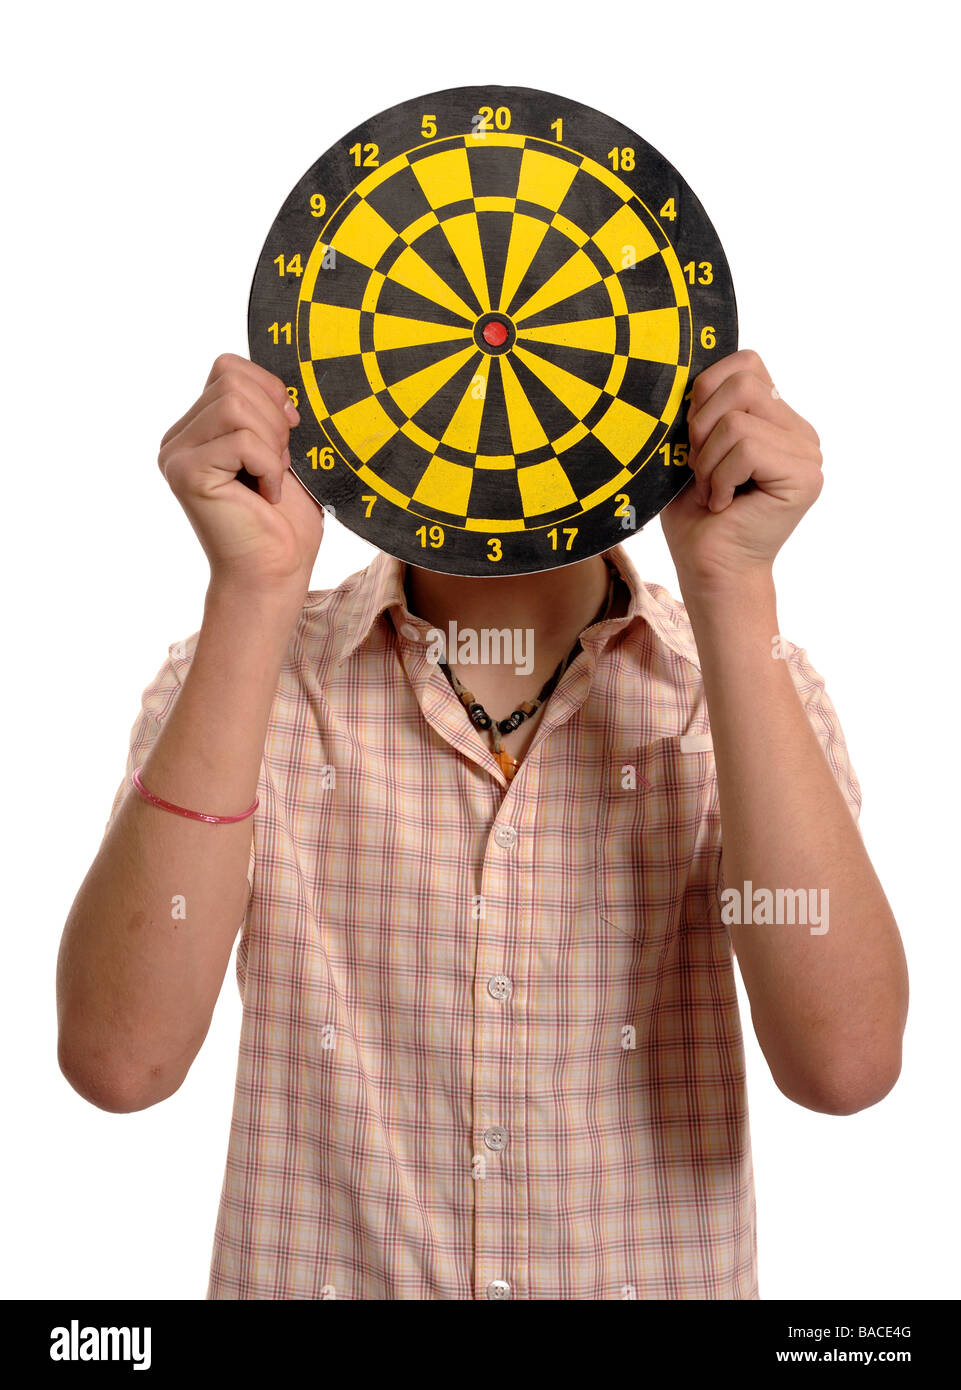 Boy holding a dartboard Stock Photo